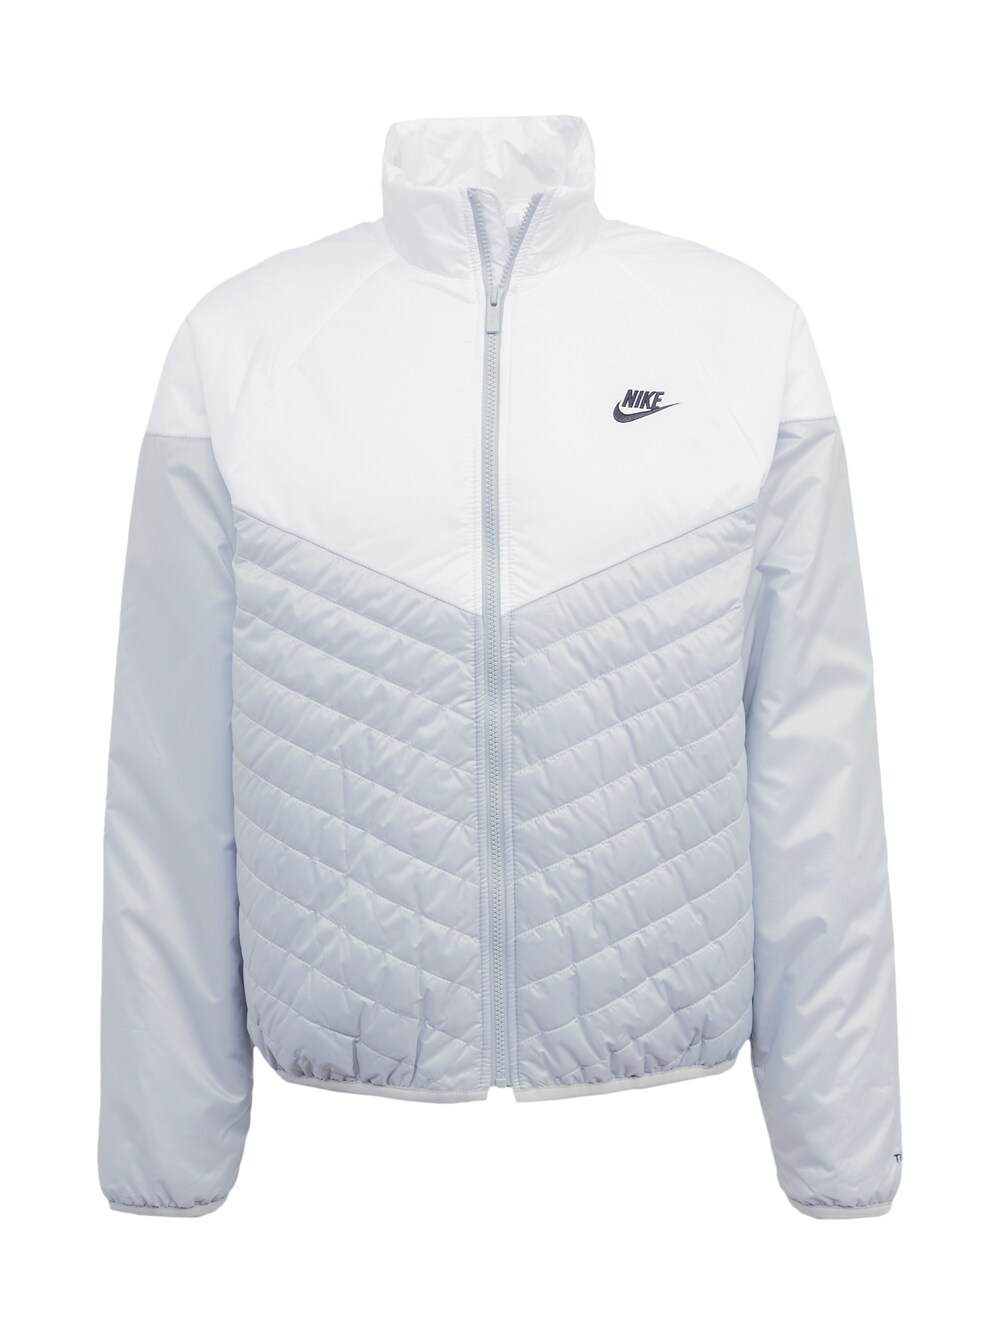 Межсезонная куртка Nike Sportswear, светло-серый межсезонная куртка nike белый